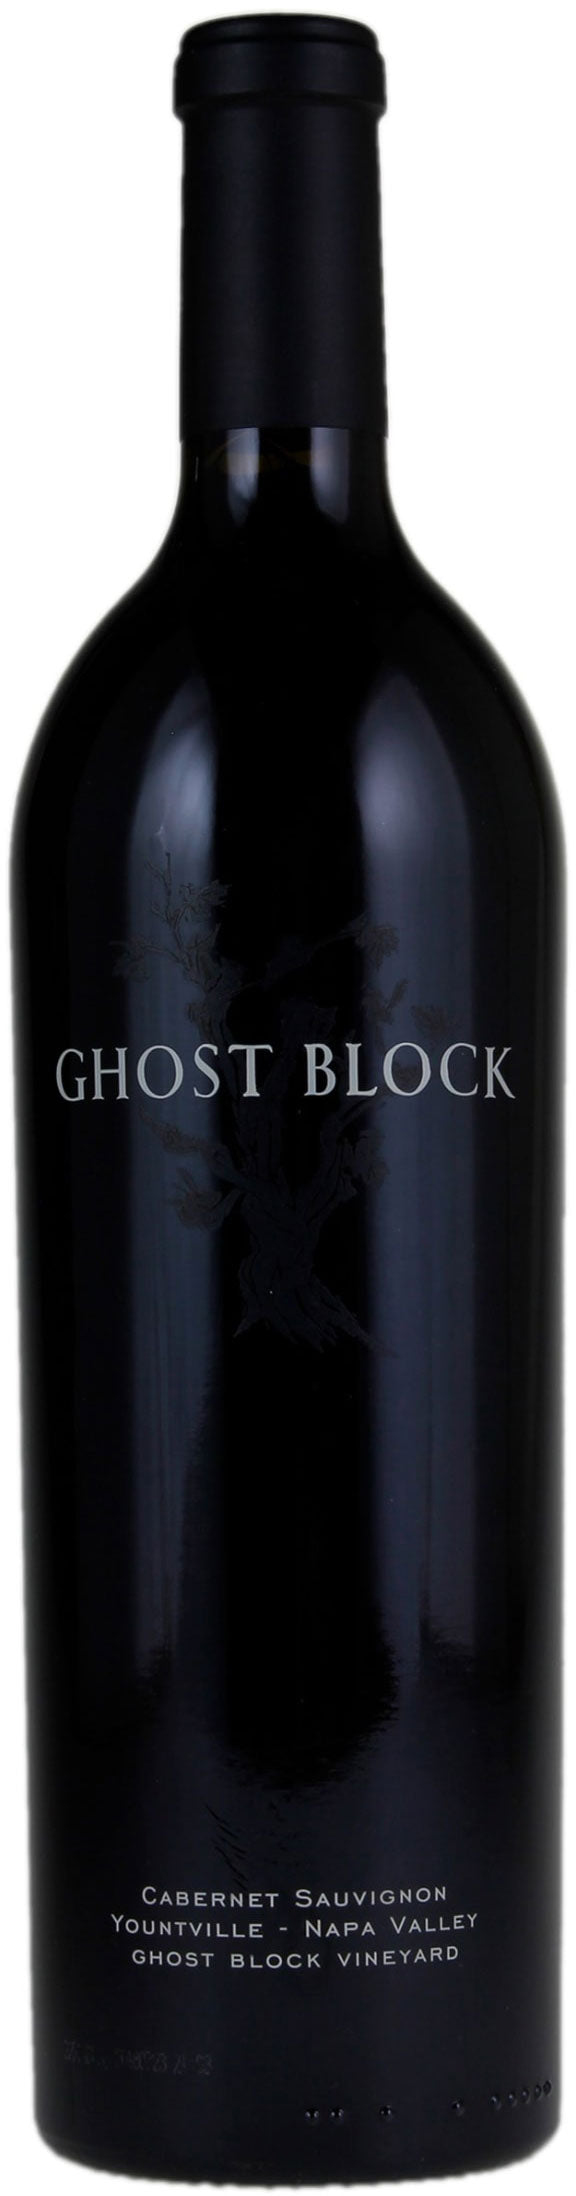 Ghost Block Cabernet Sauvignon Single Vineyard 2017